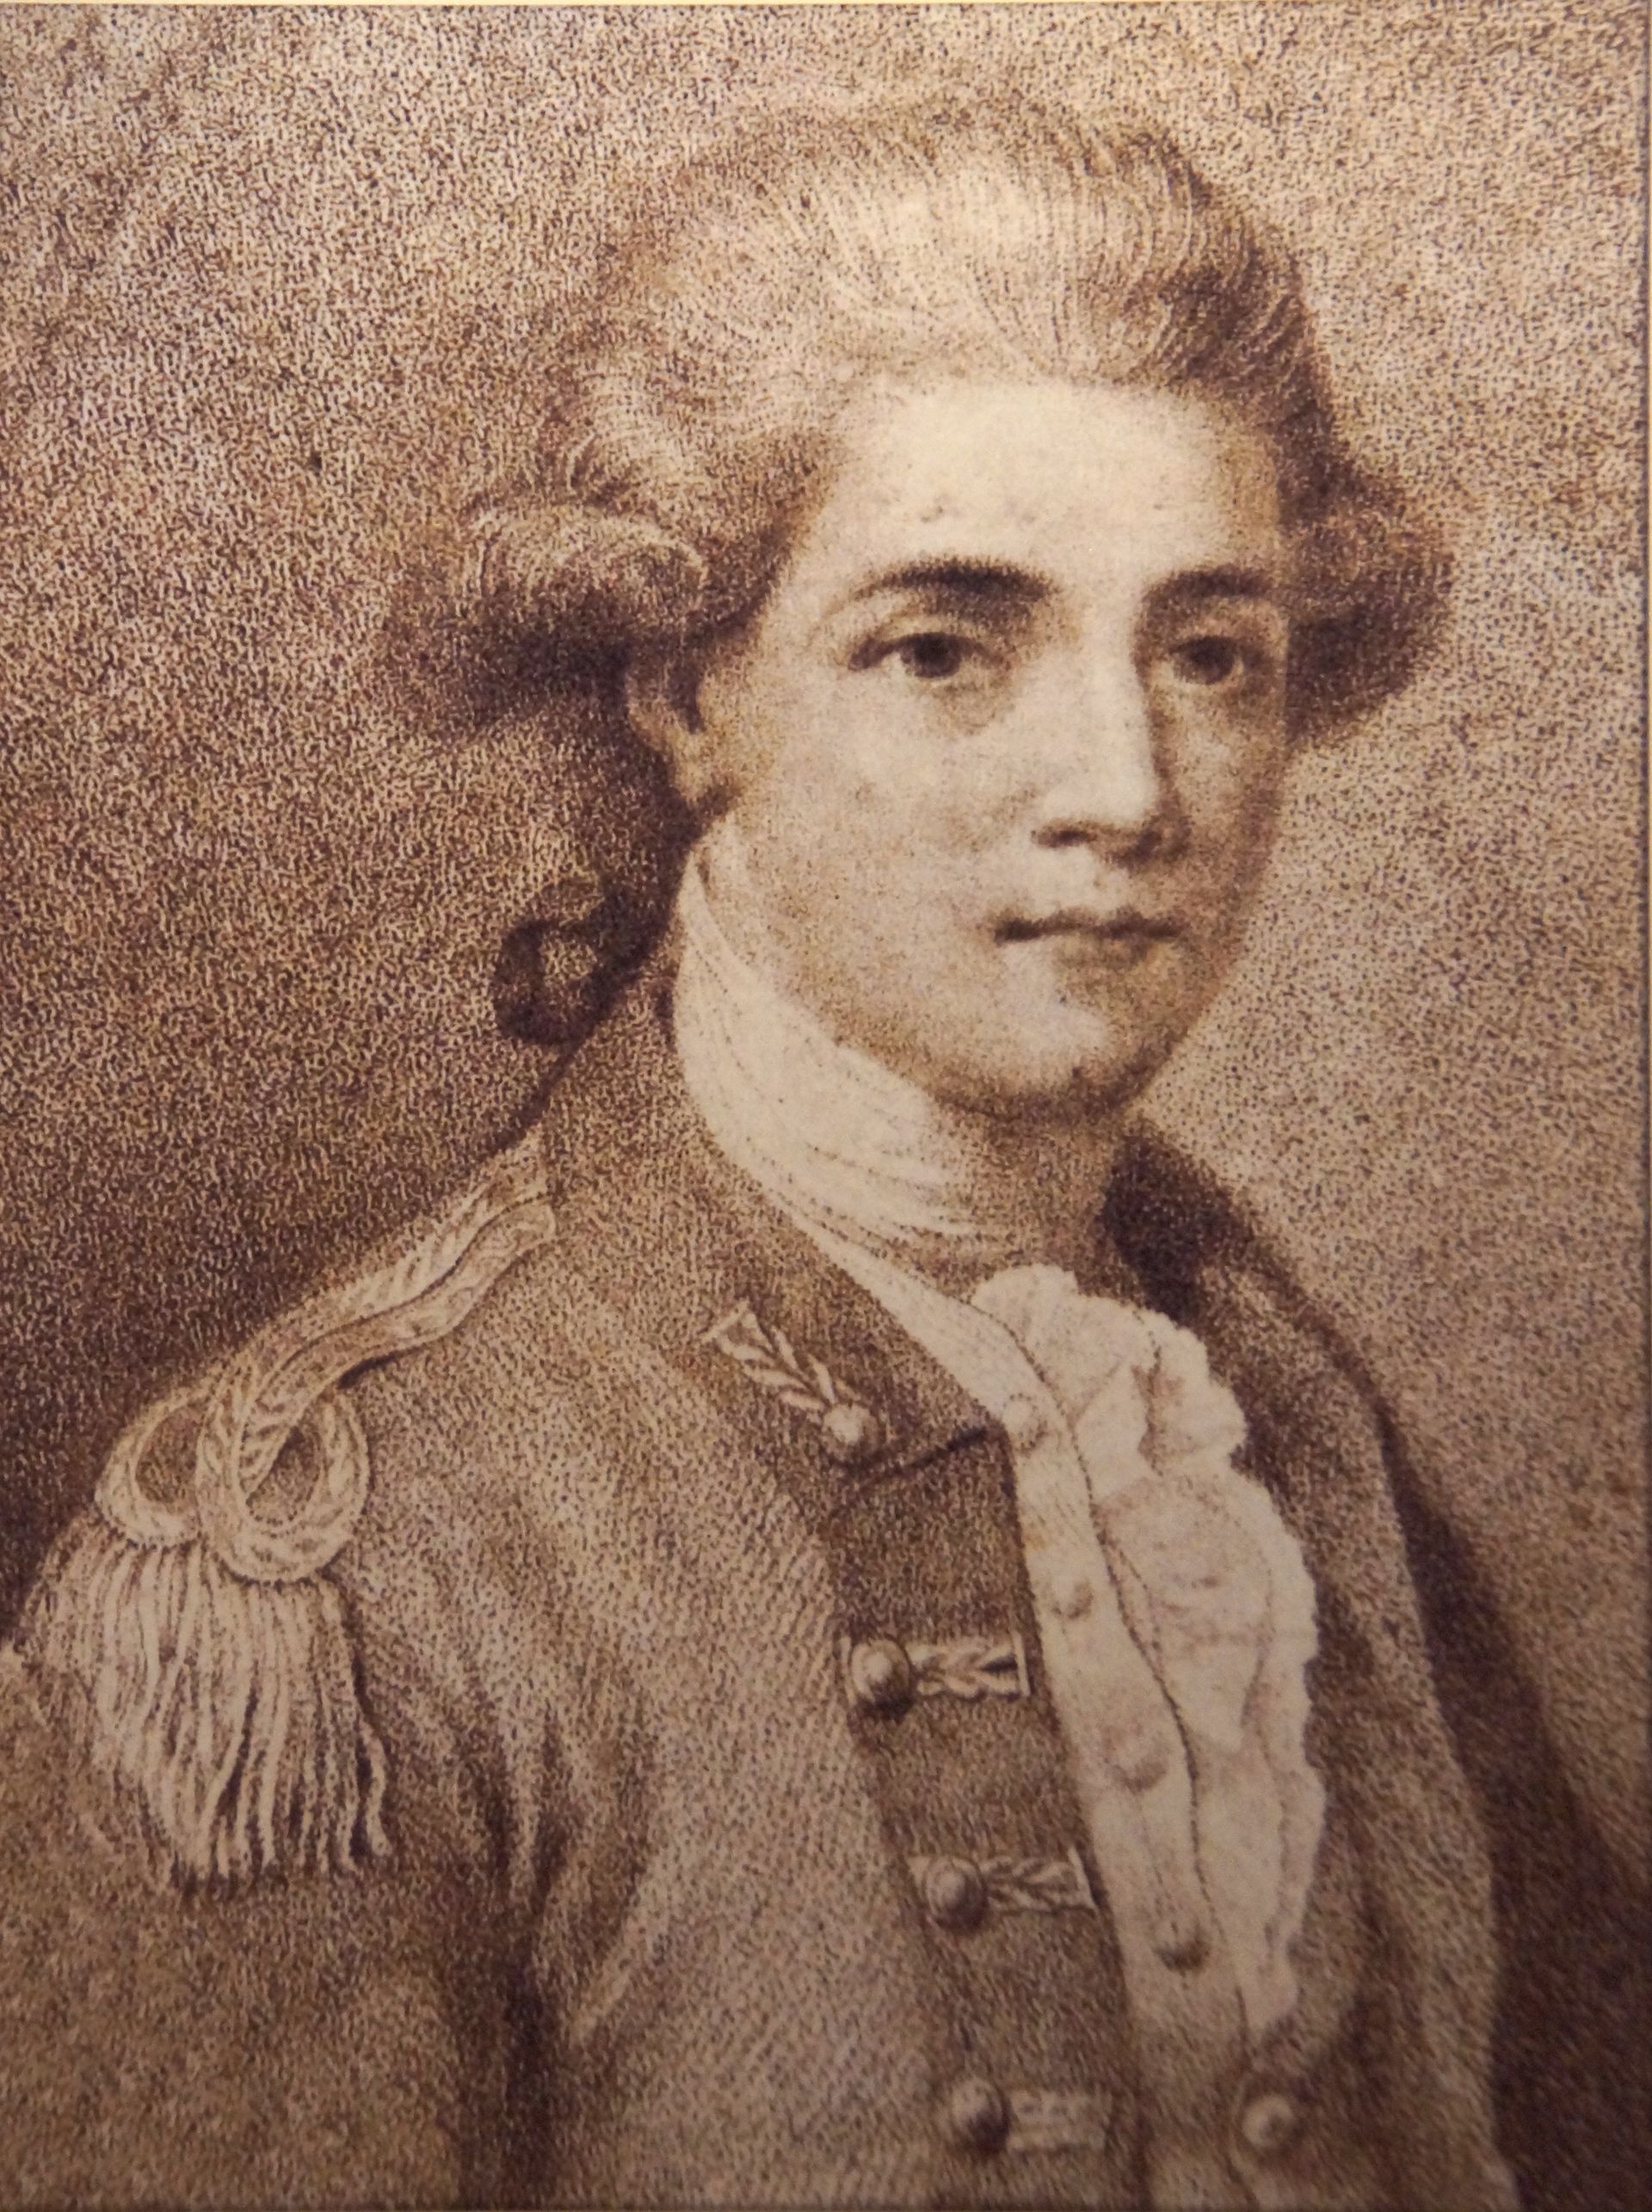 Portrait of Major John Andre by himself, 1780